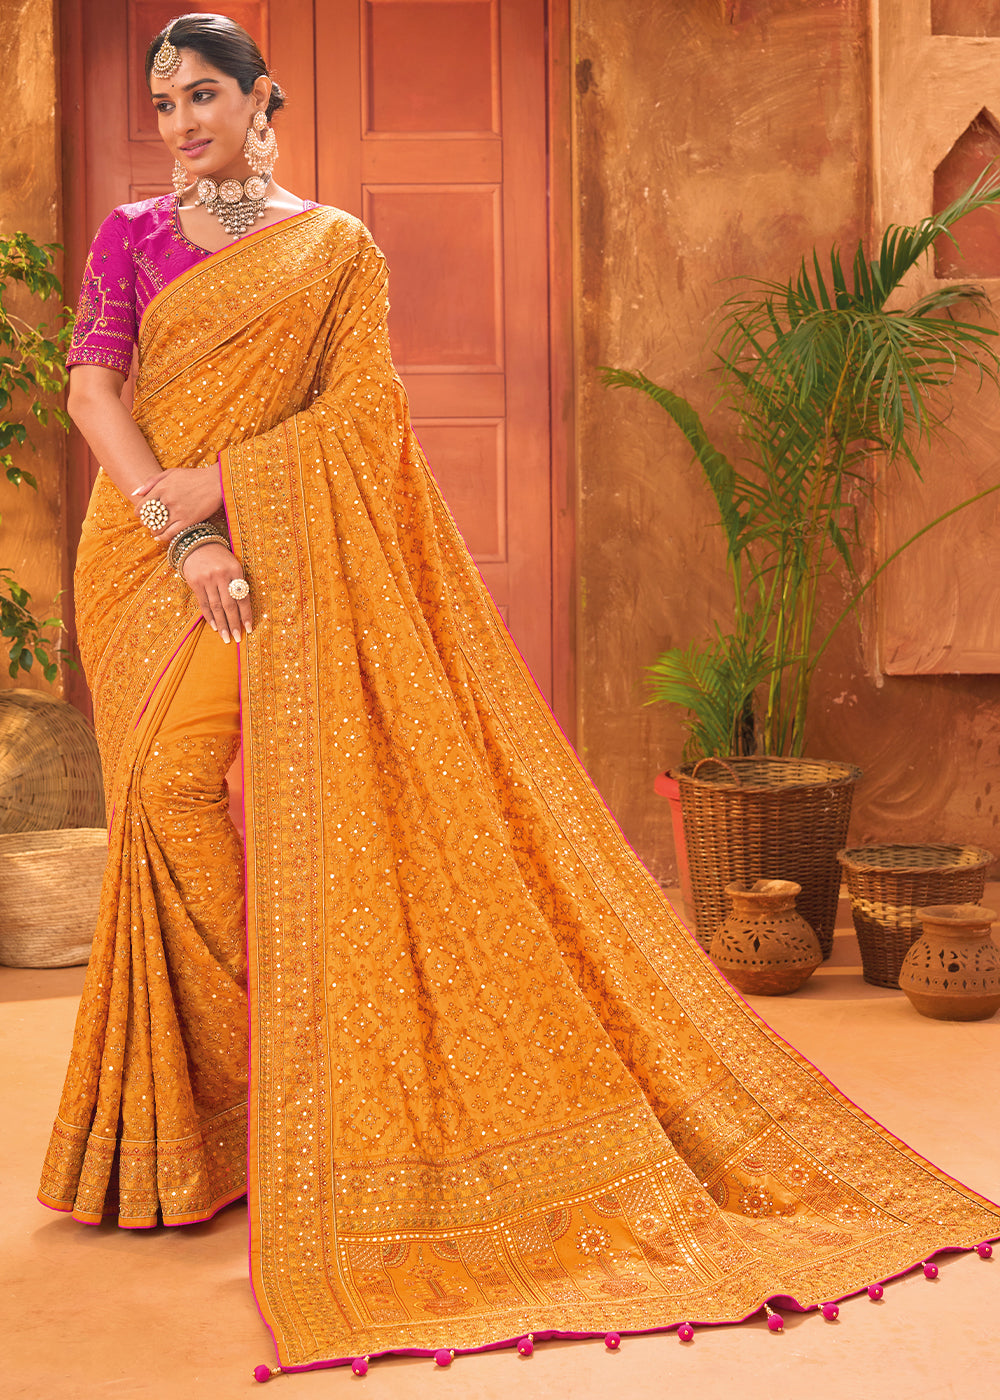 Apricot Orange Banarasi Silk Saree with Diamond,Mirror & Kachhi work